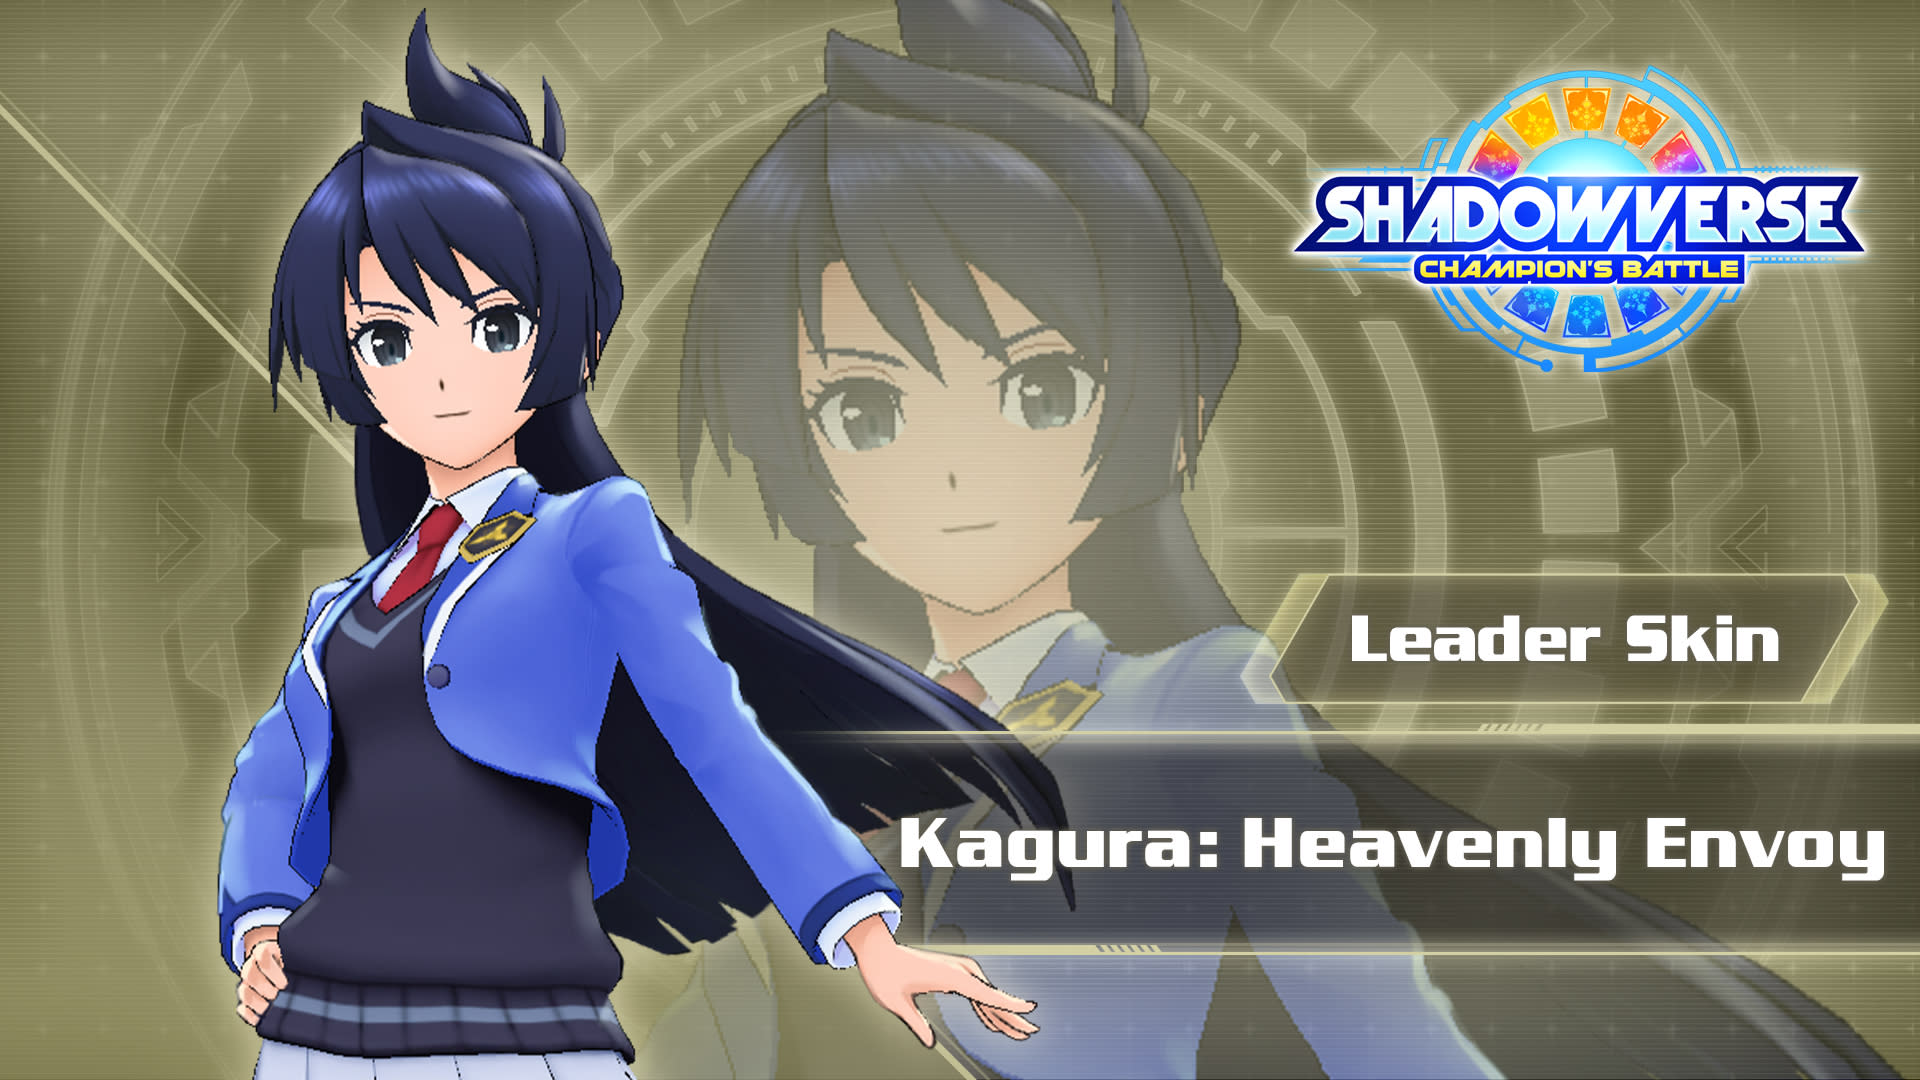 Leader Skin: "Kagura: Heavenly Envoy"